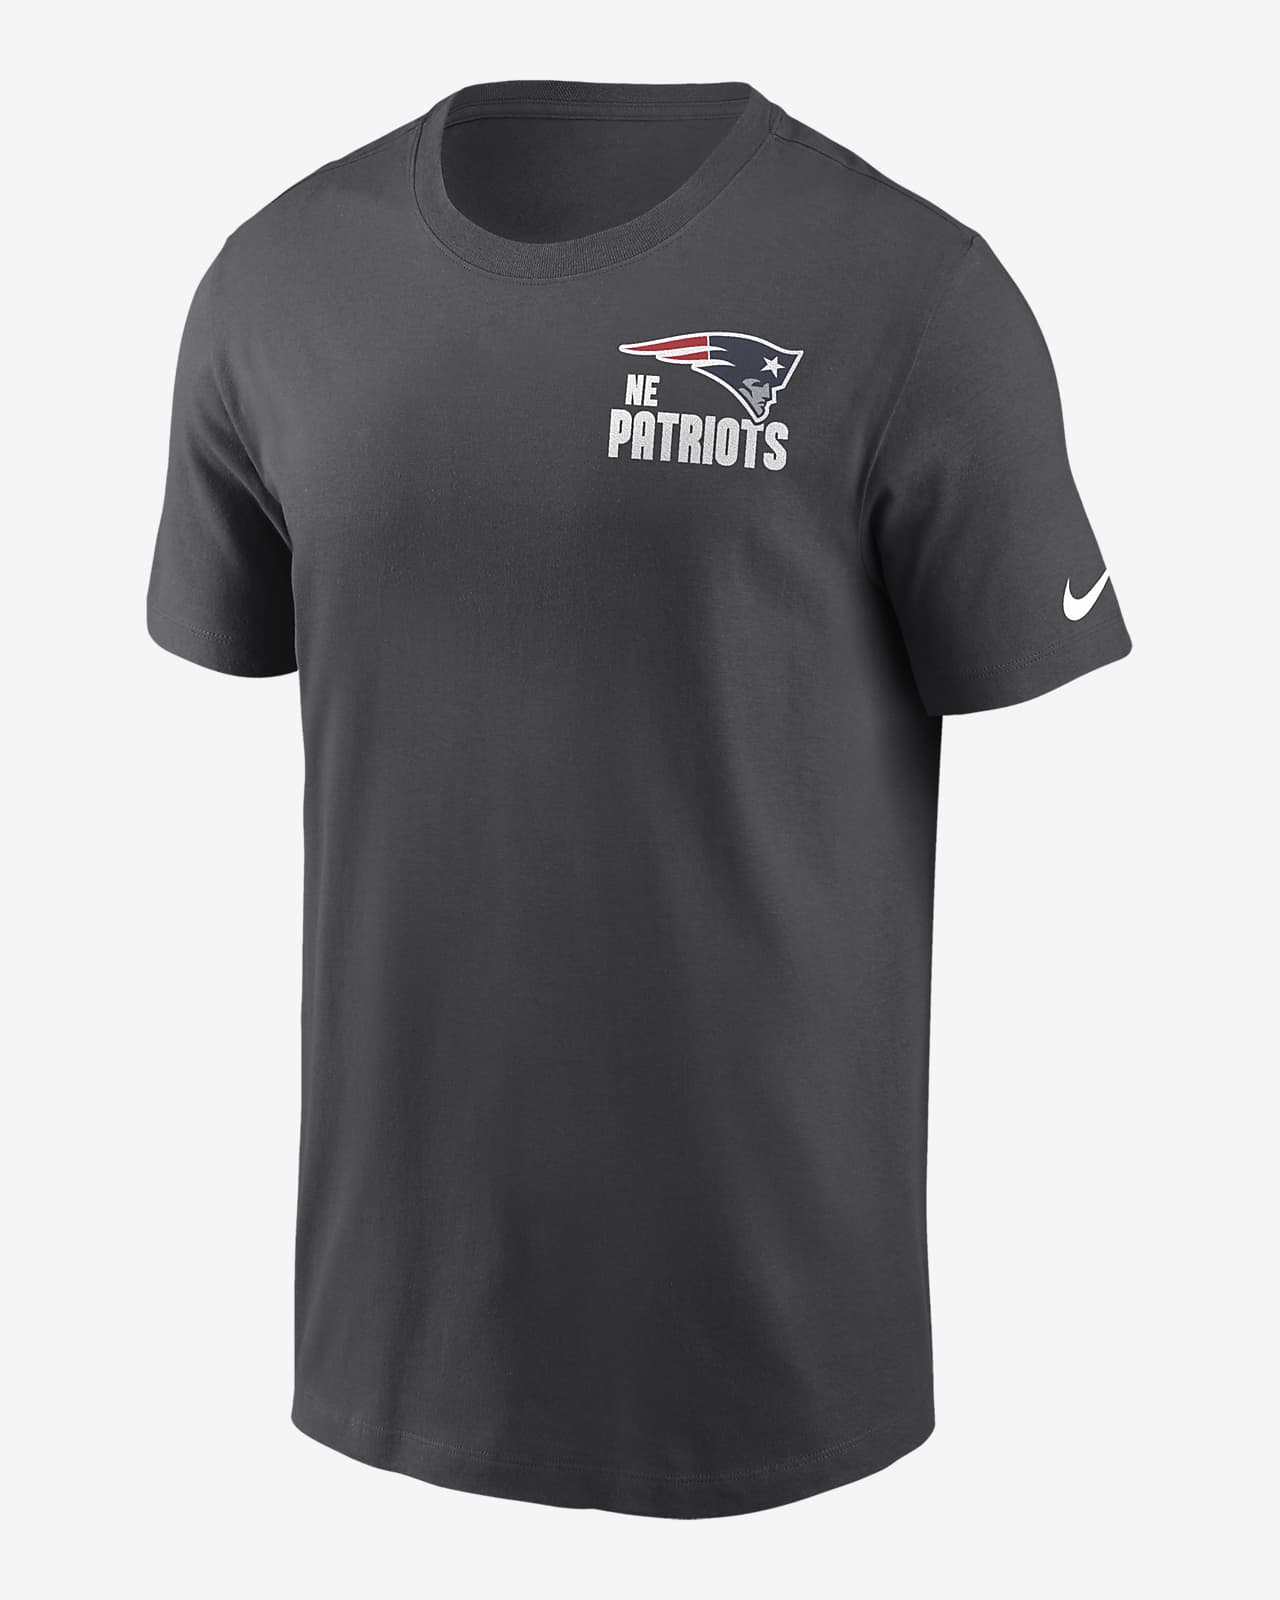 New England Patriots Blitz Team Essential Men's Nike NFL T-Shirt